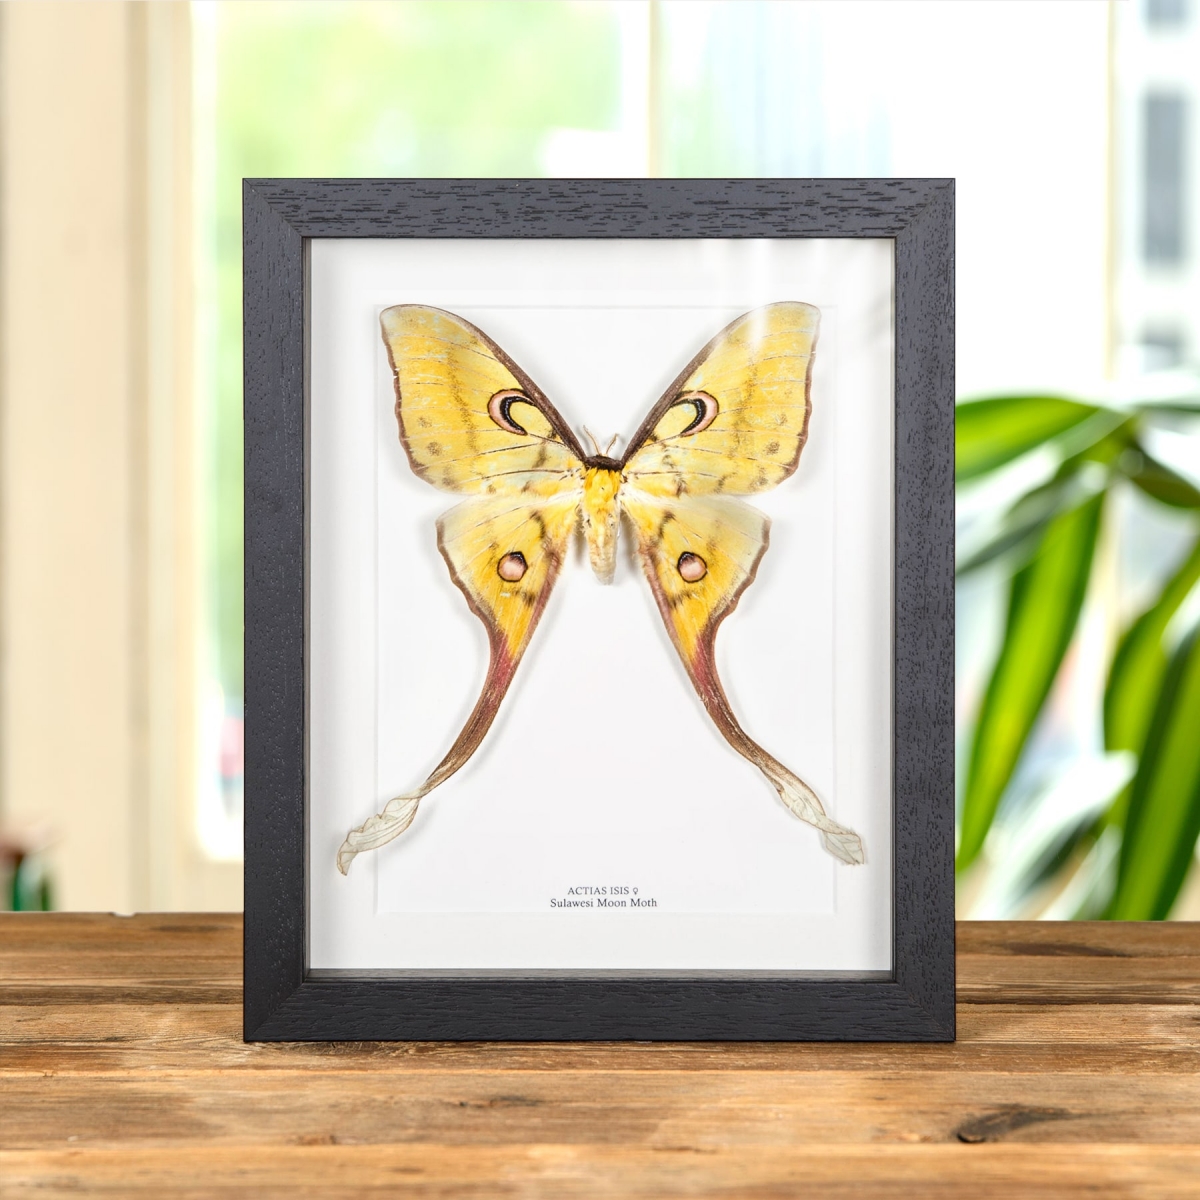 Minibeast Female Sulawesi Moon Moth In Box Frame (Actias isis)